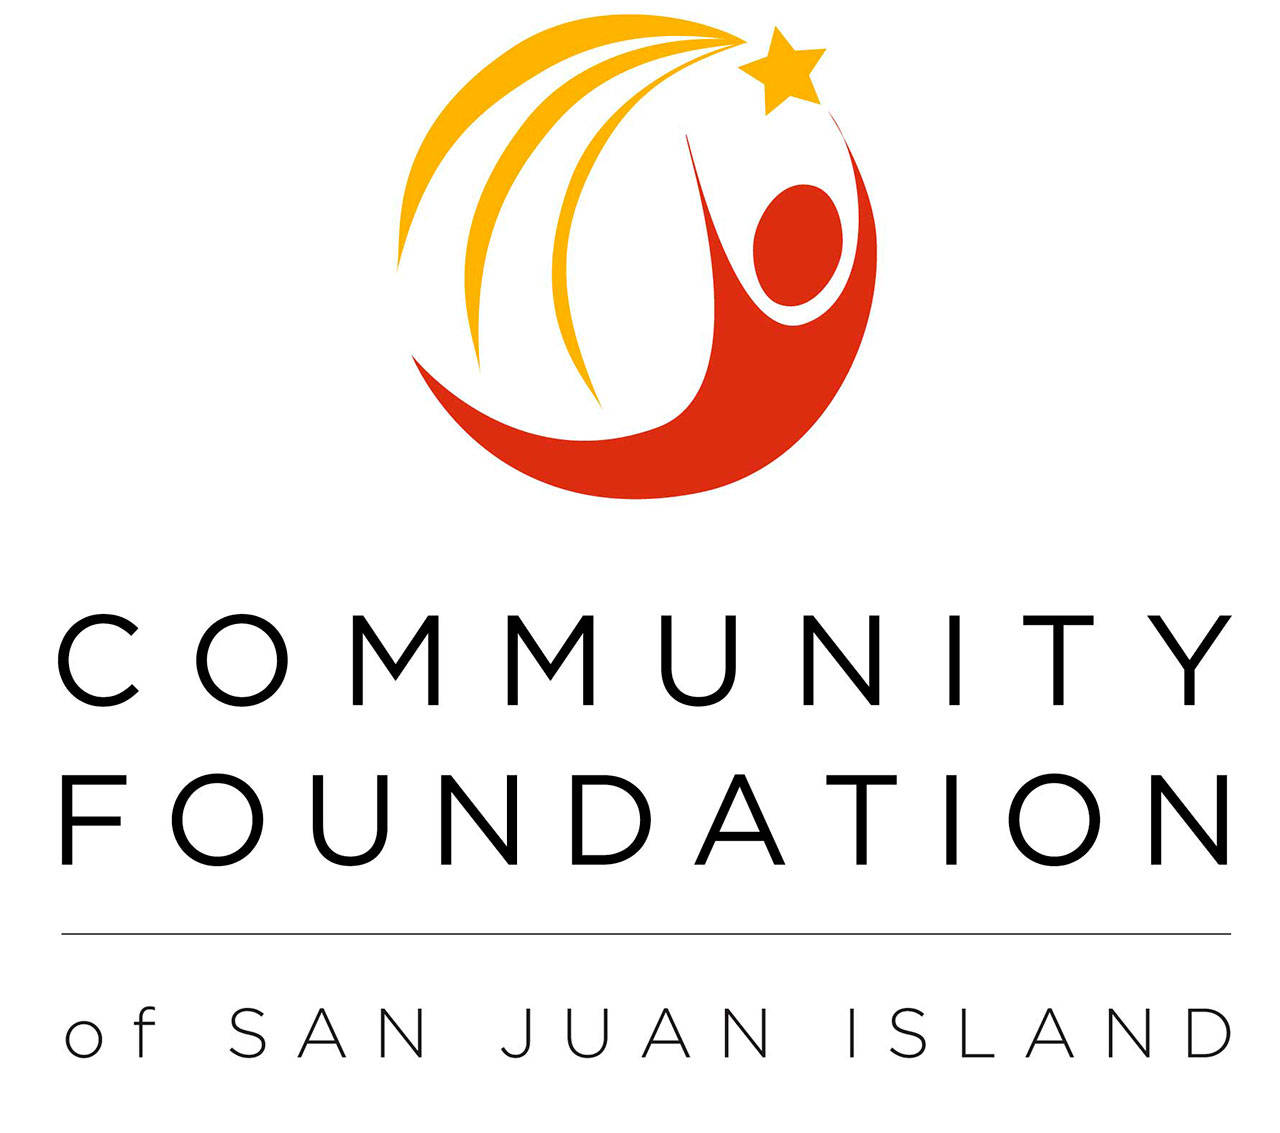 San Juan Island Women’s Fund awards $8,000 to local nonprofits